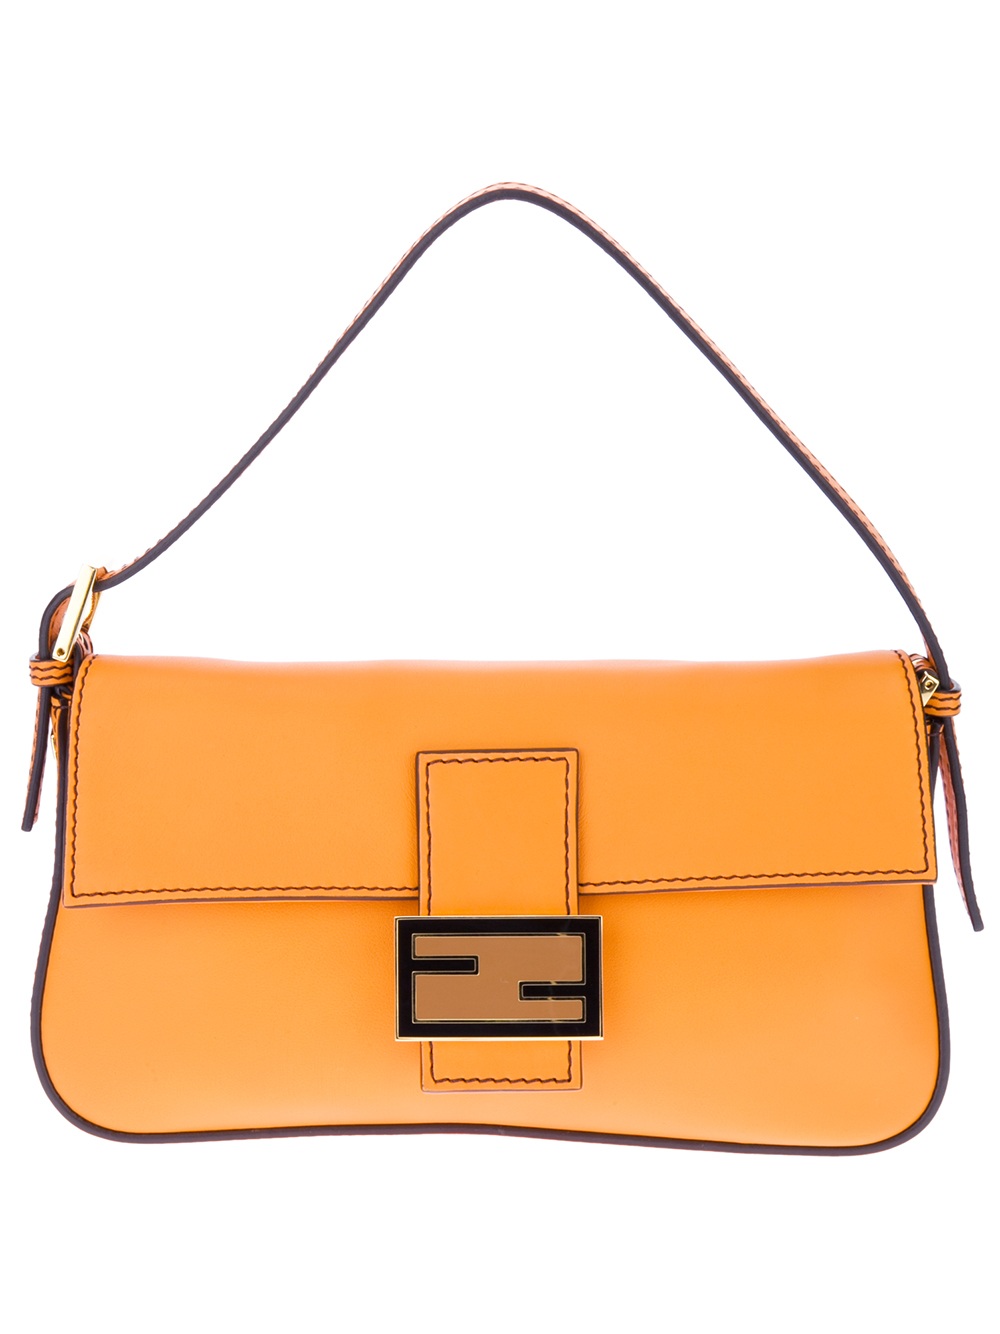 Fendi - Authenticated Baguette Handbag - Plastic Orange for Women, Very Good Condition